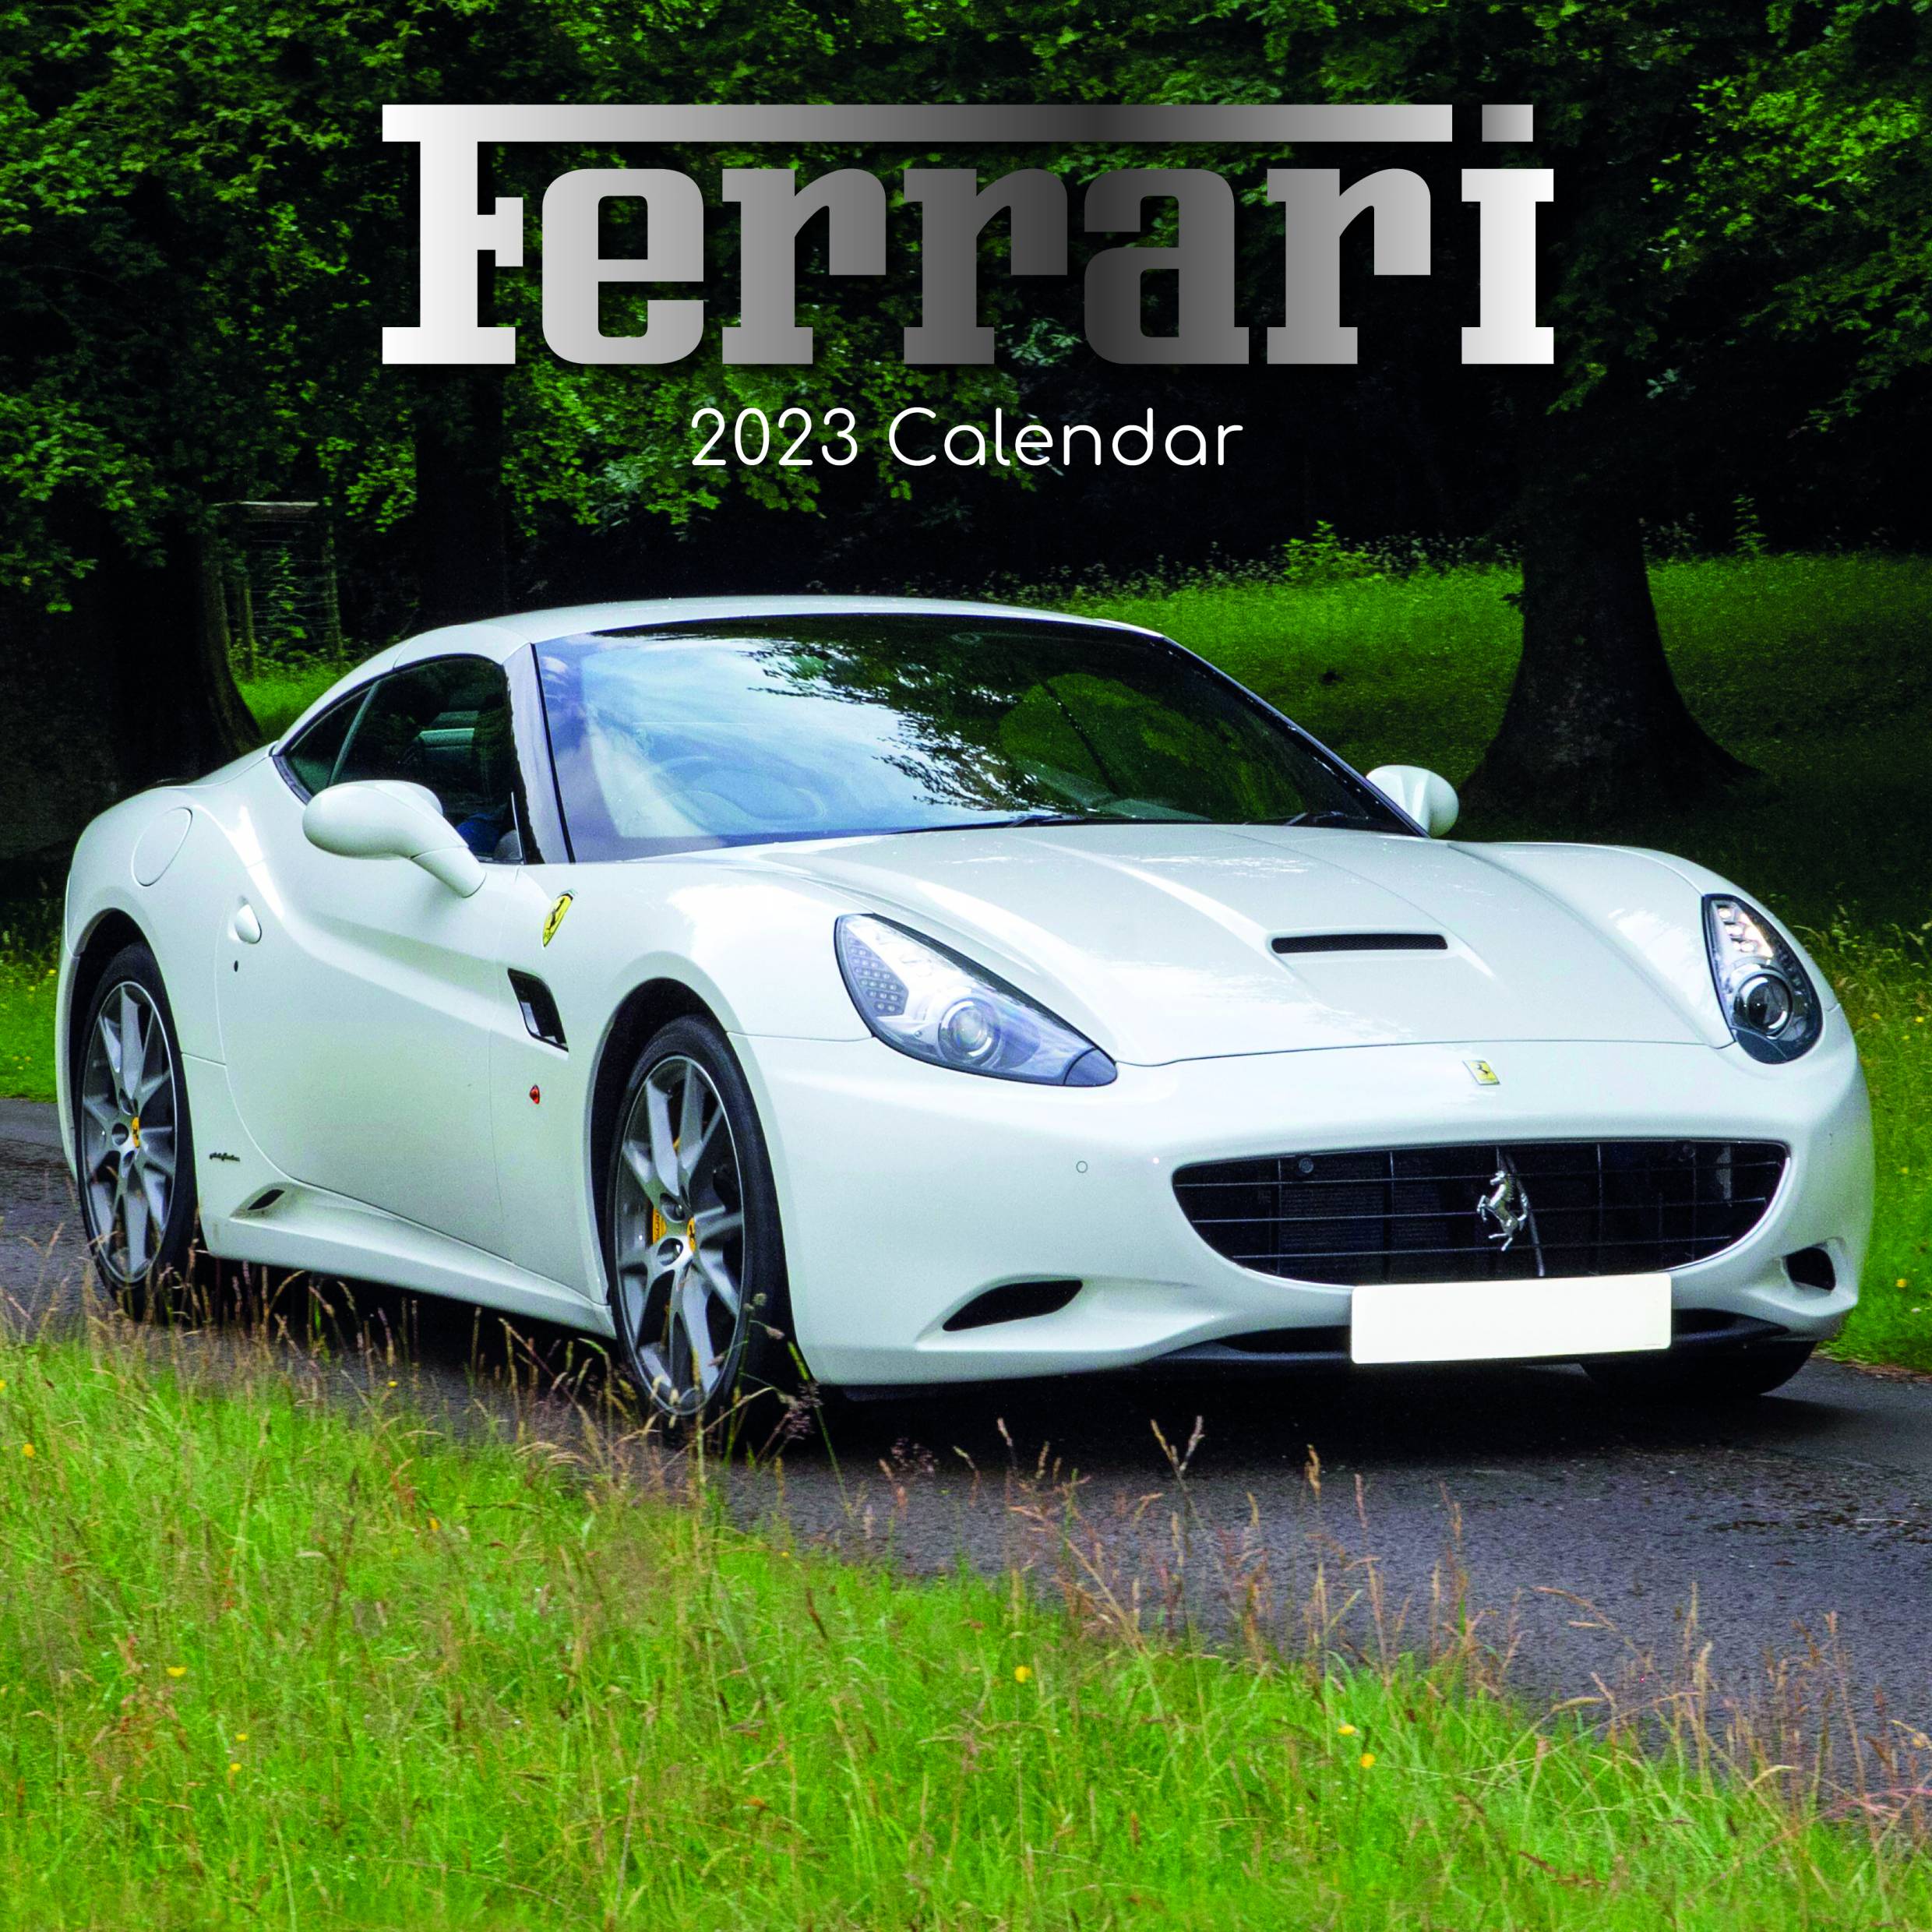 2023 Ferrari - Square Wall Calendar